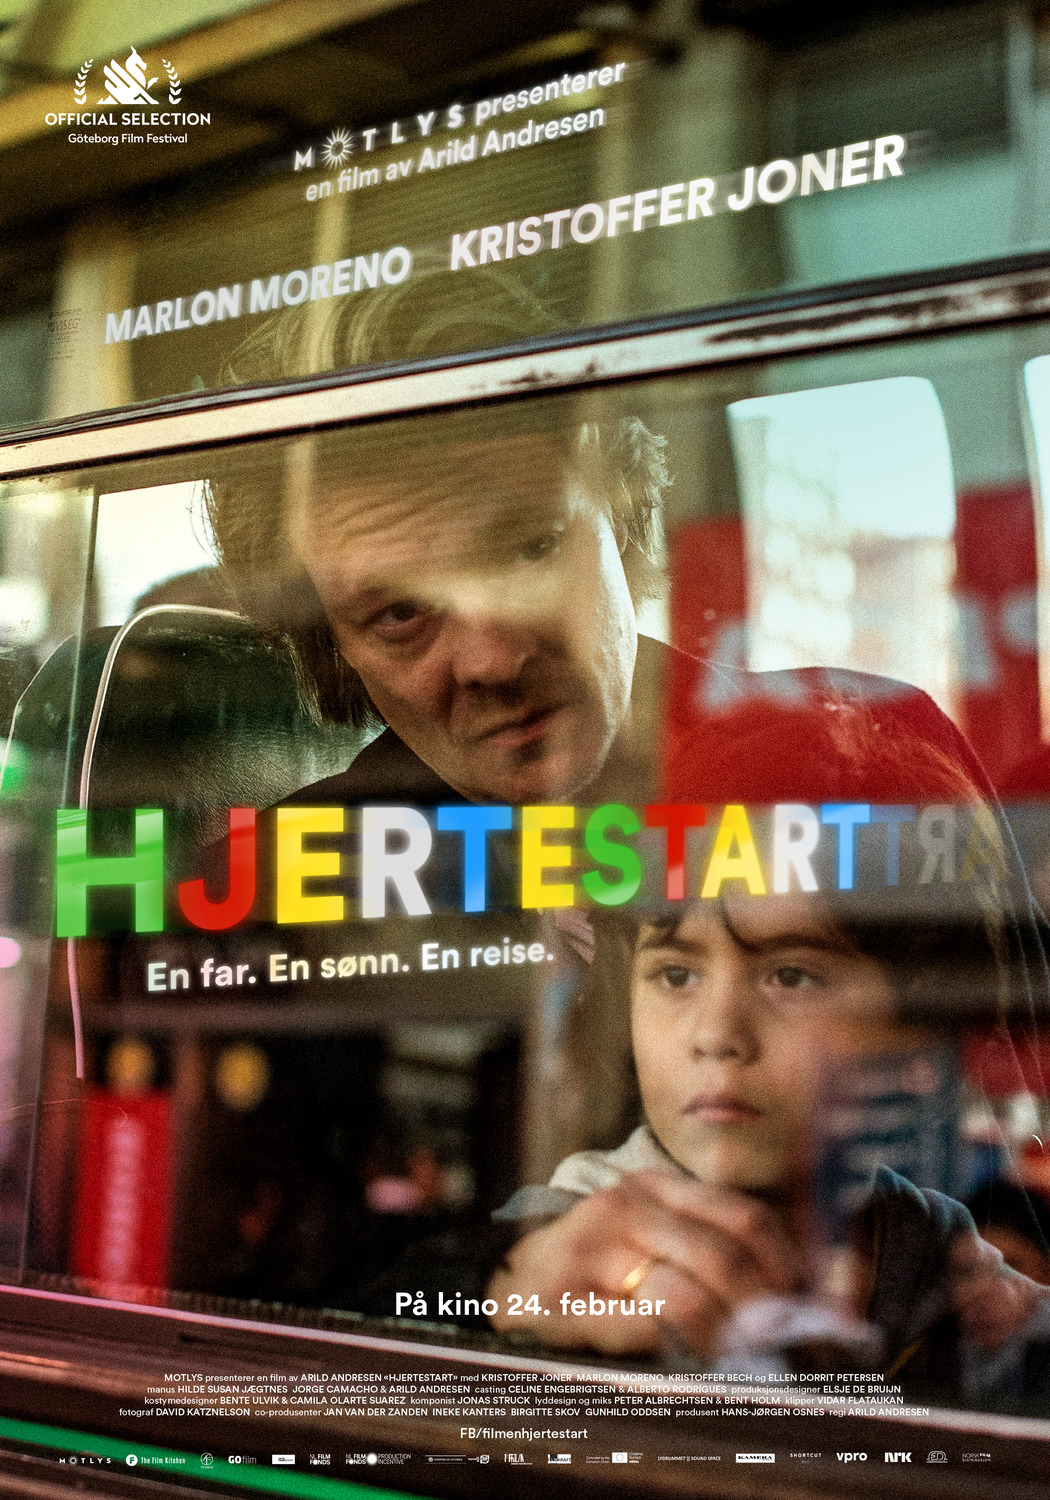 Extra Large Movie Poster Image for Hjertestart 